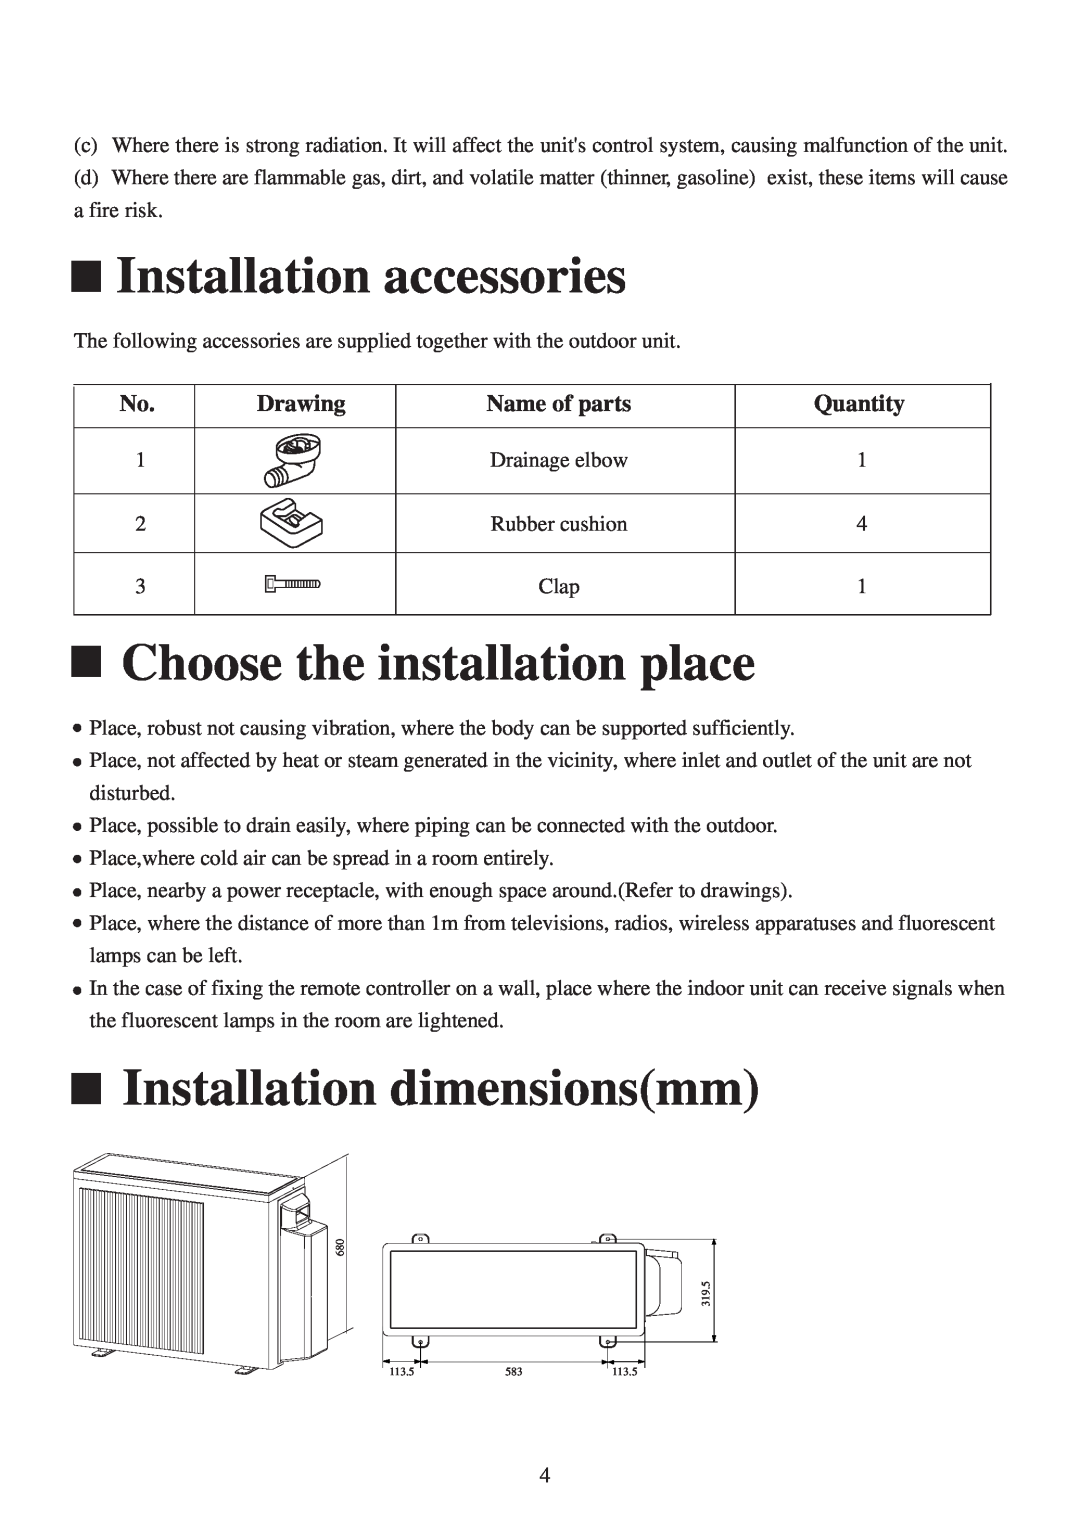 Haier AU222XFERA Installation accessories, Choose the installation place, Installation dimensionsmm, Drawing, Quantity 